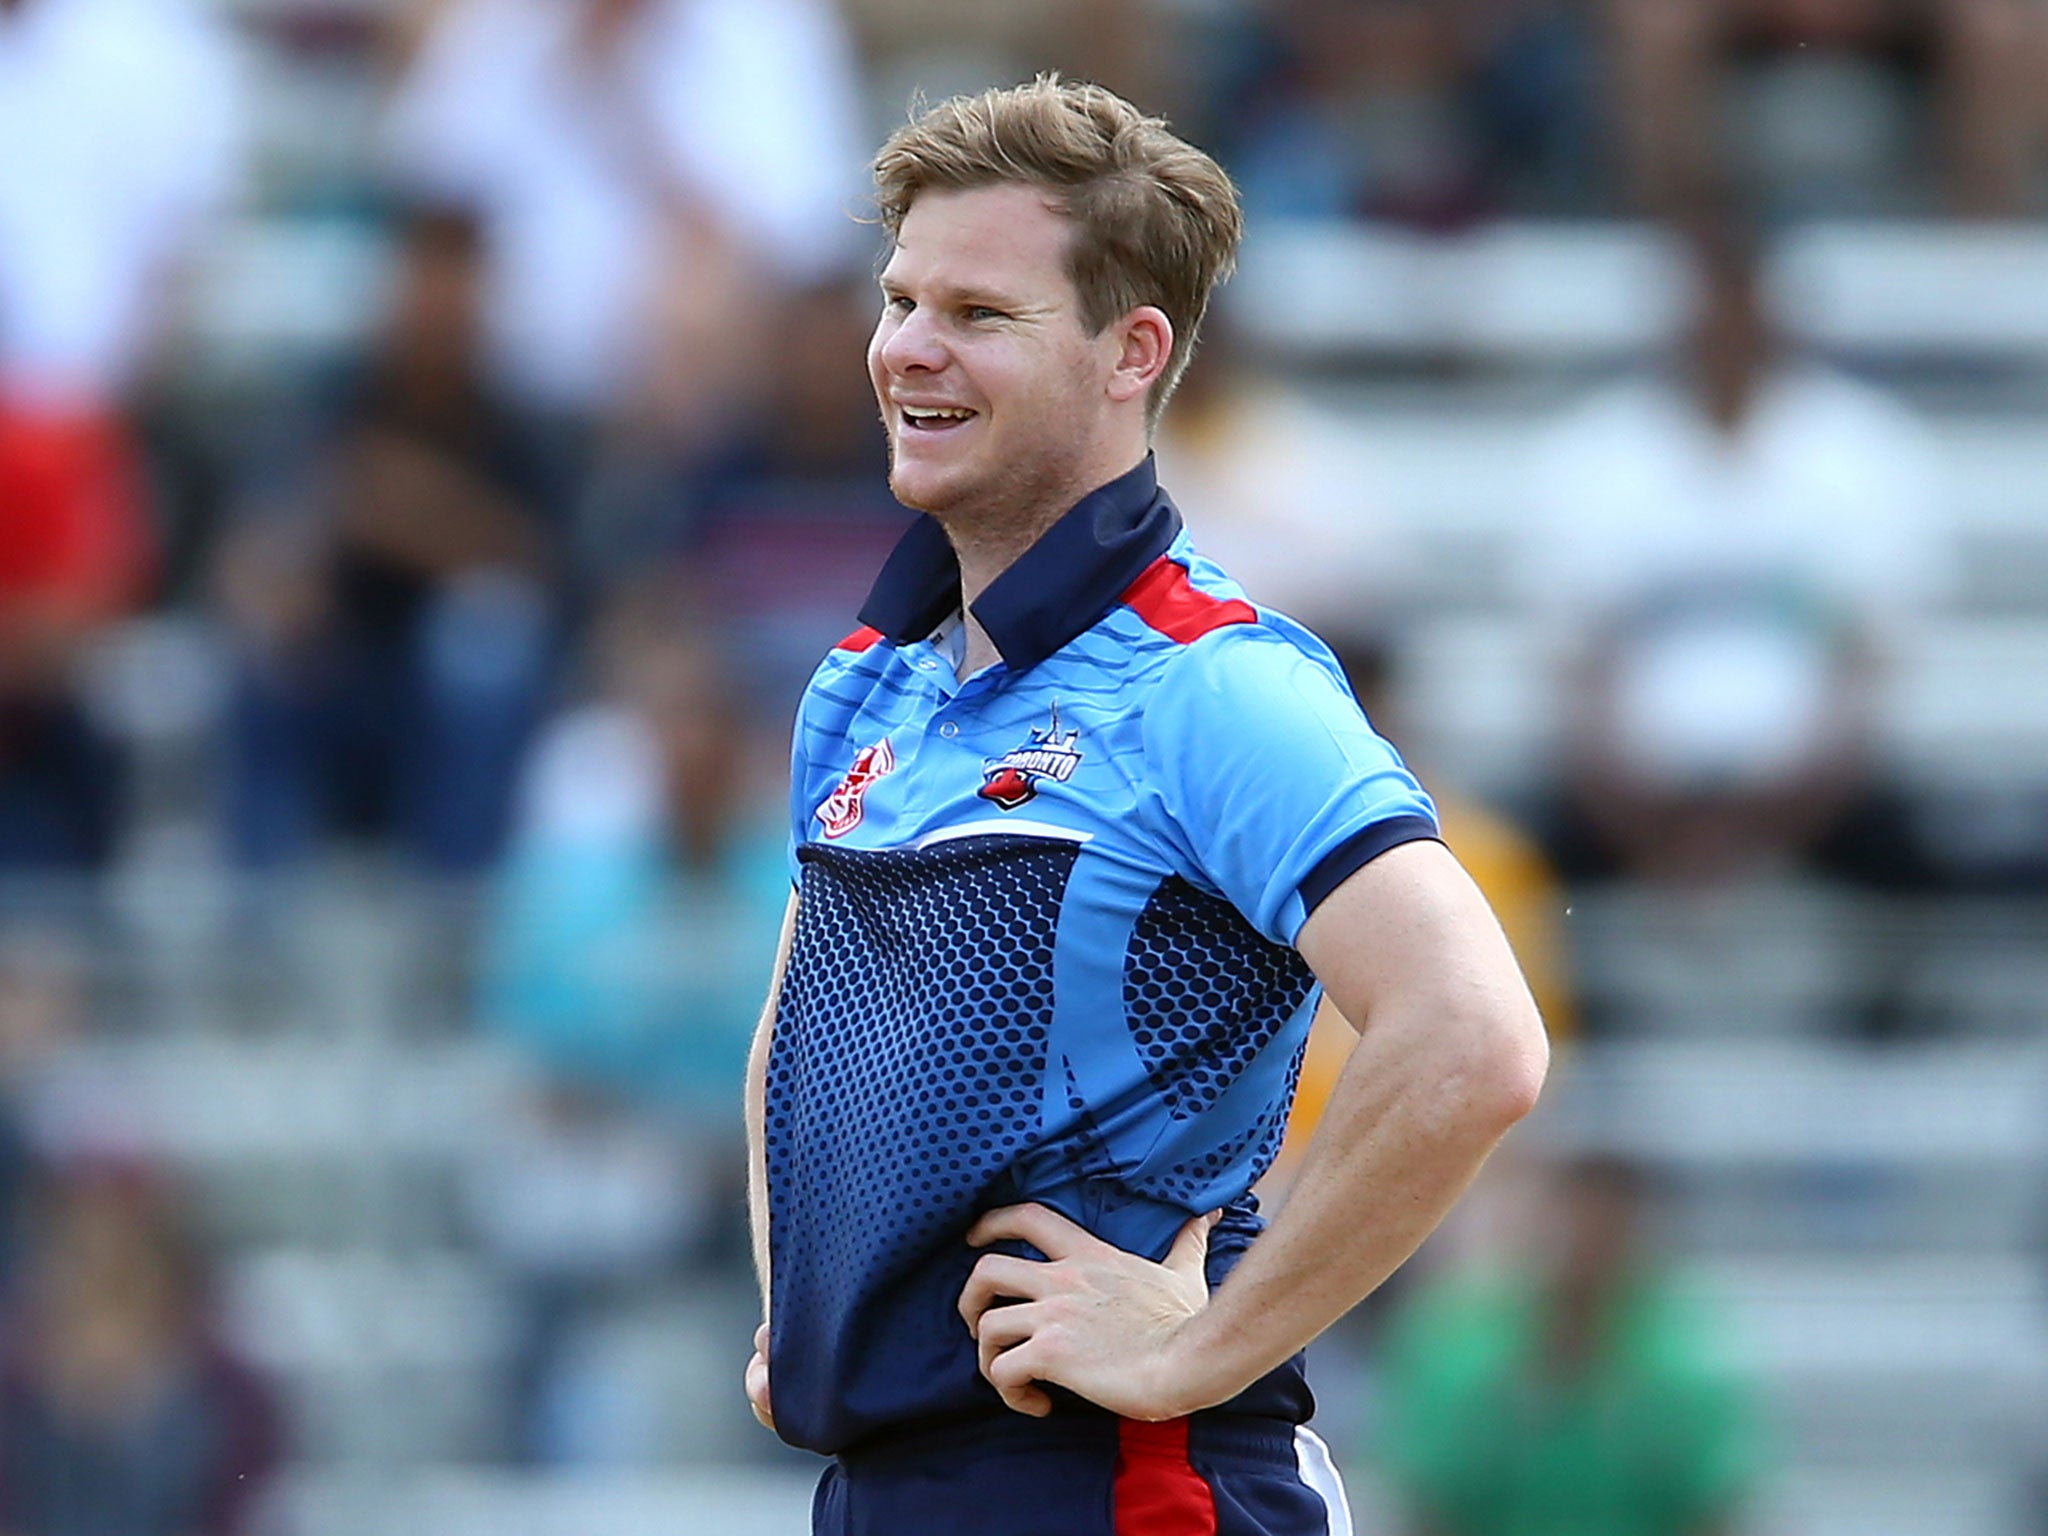 Cricket Australia have announced that Steve Smith will return to Australian club cricket next month